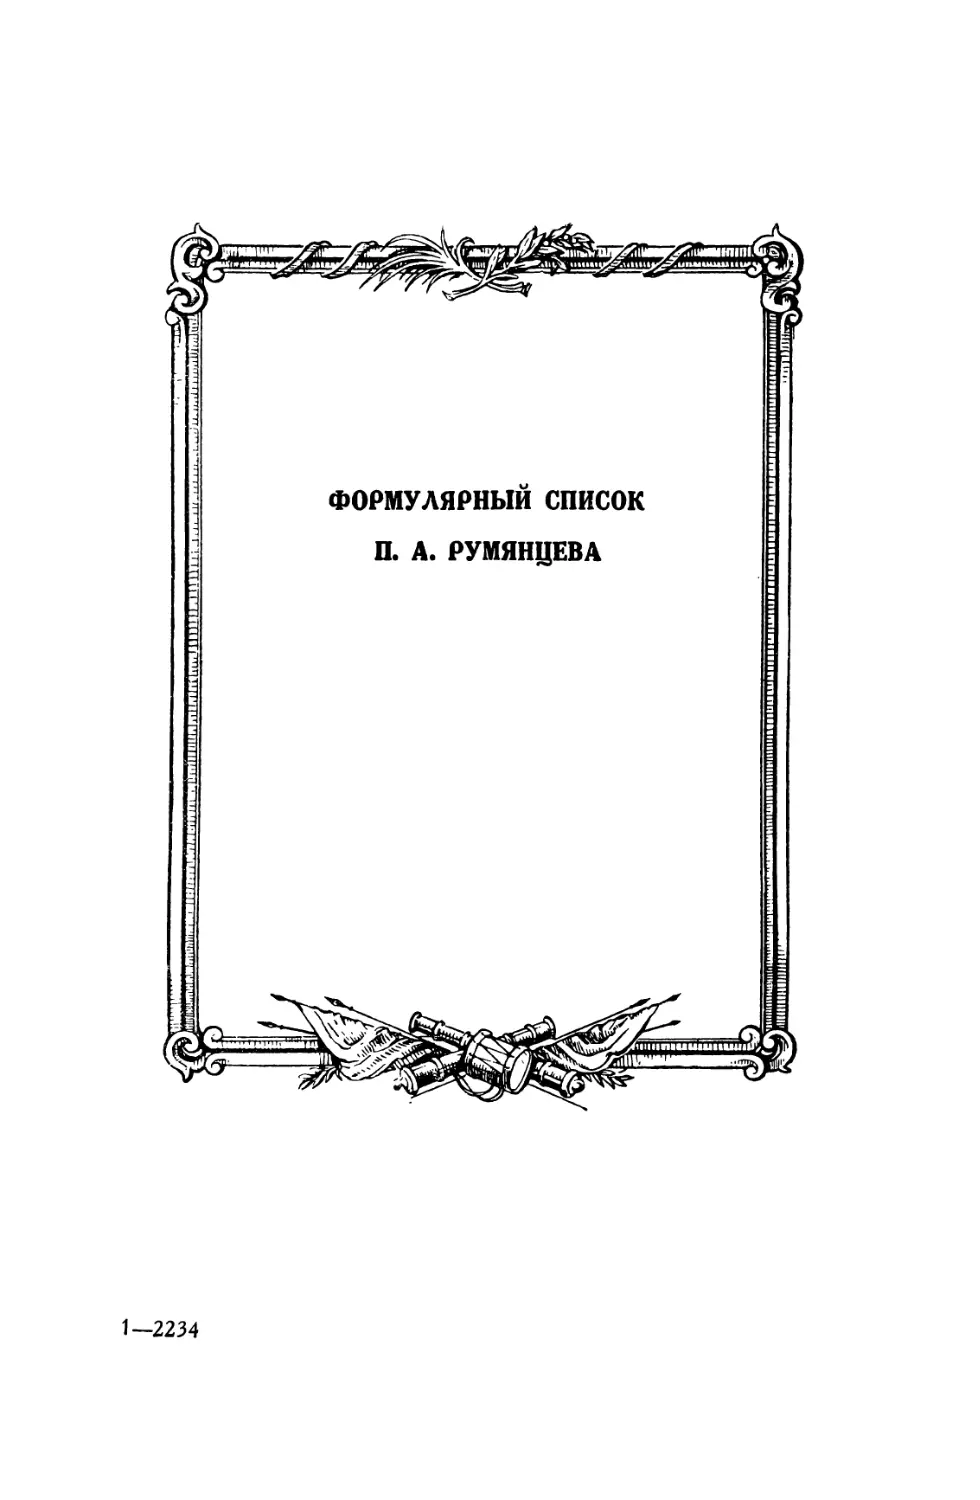 Формулярный список П. А. Румянцева